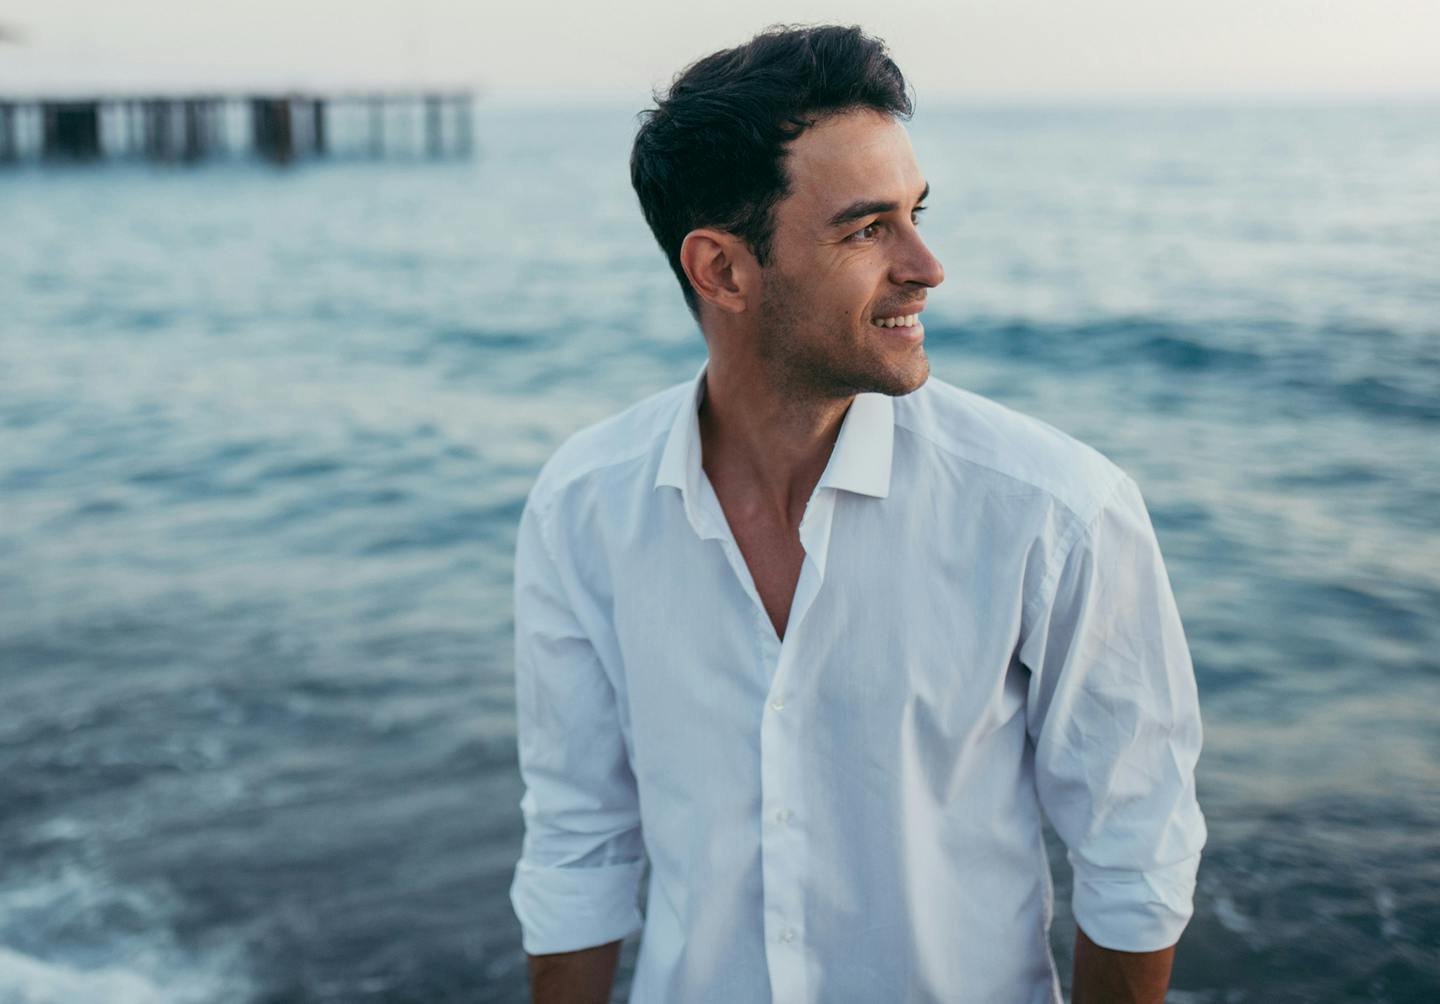 man with dark hair wearing a white button down shirt by the ocean